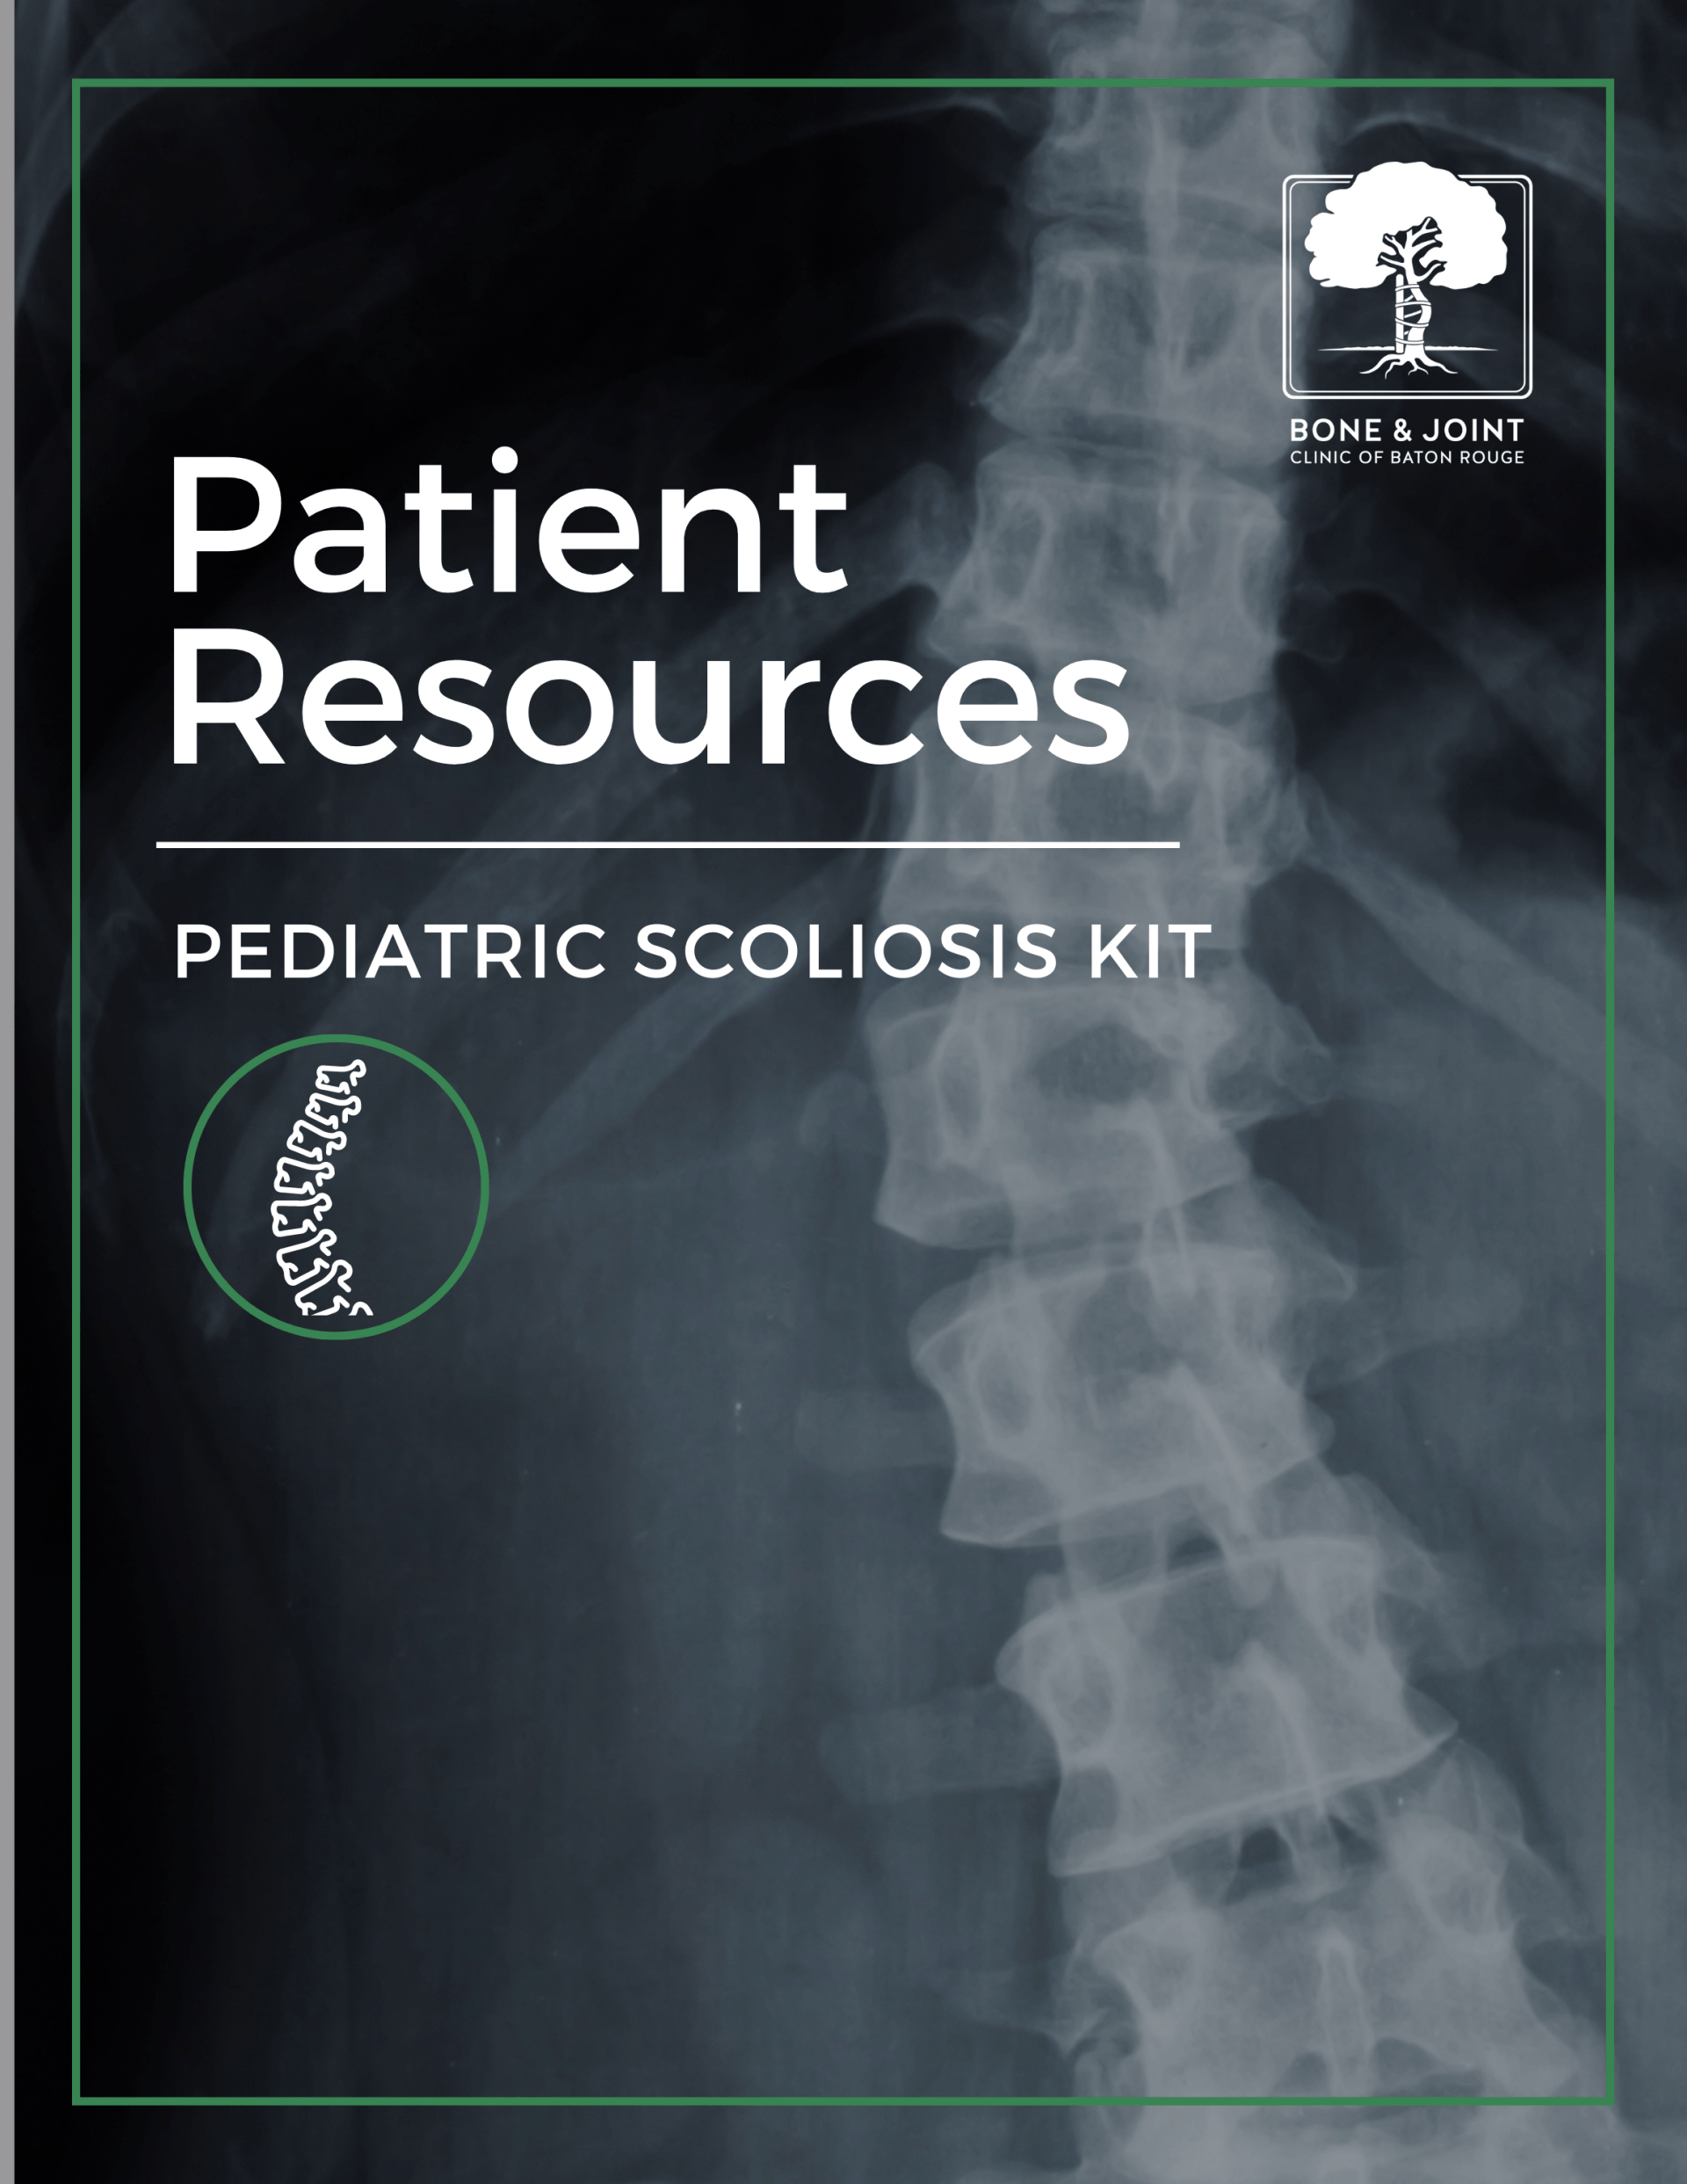 Pediatric Scoliosis patient resource kit